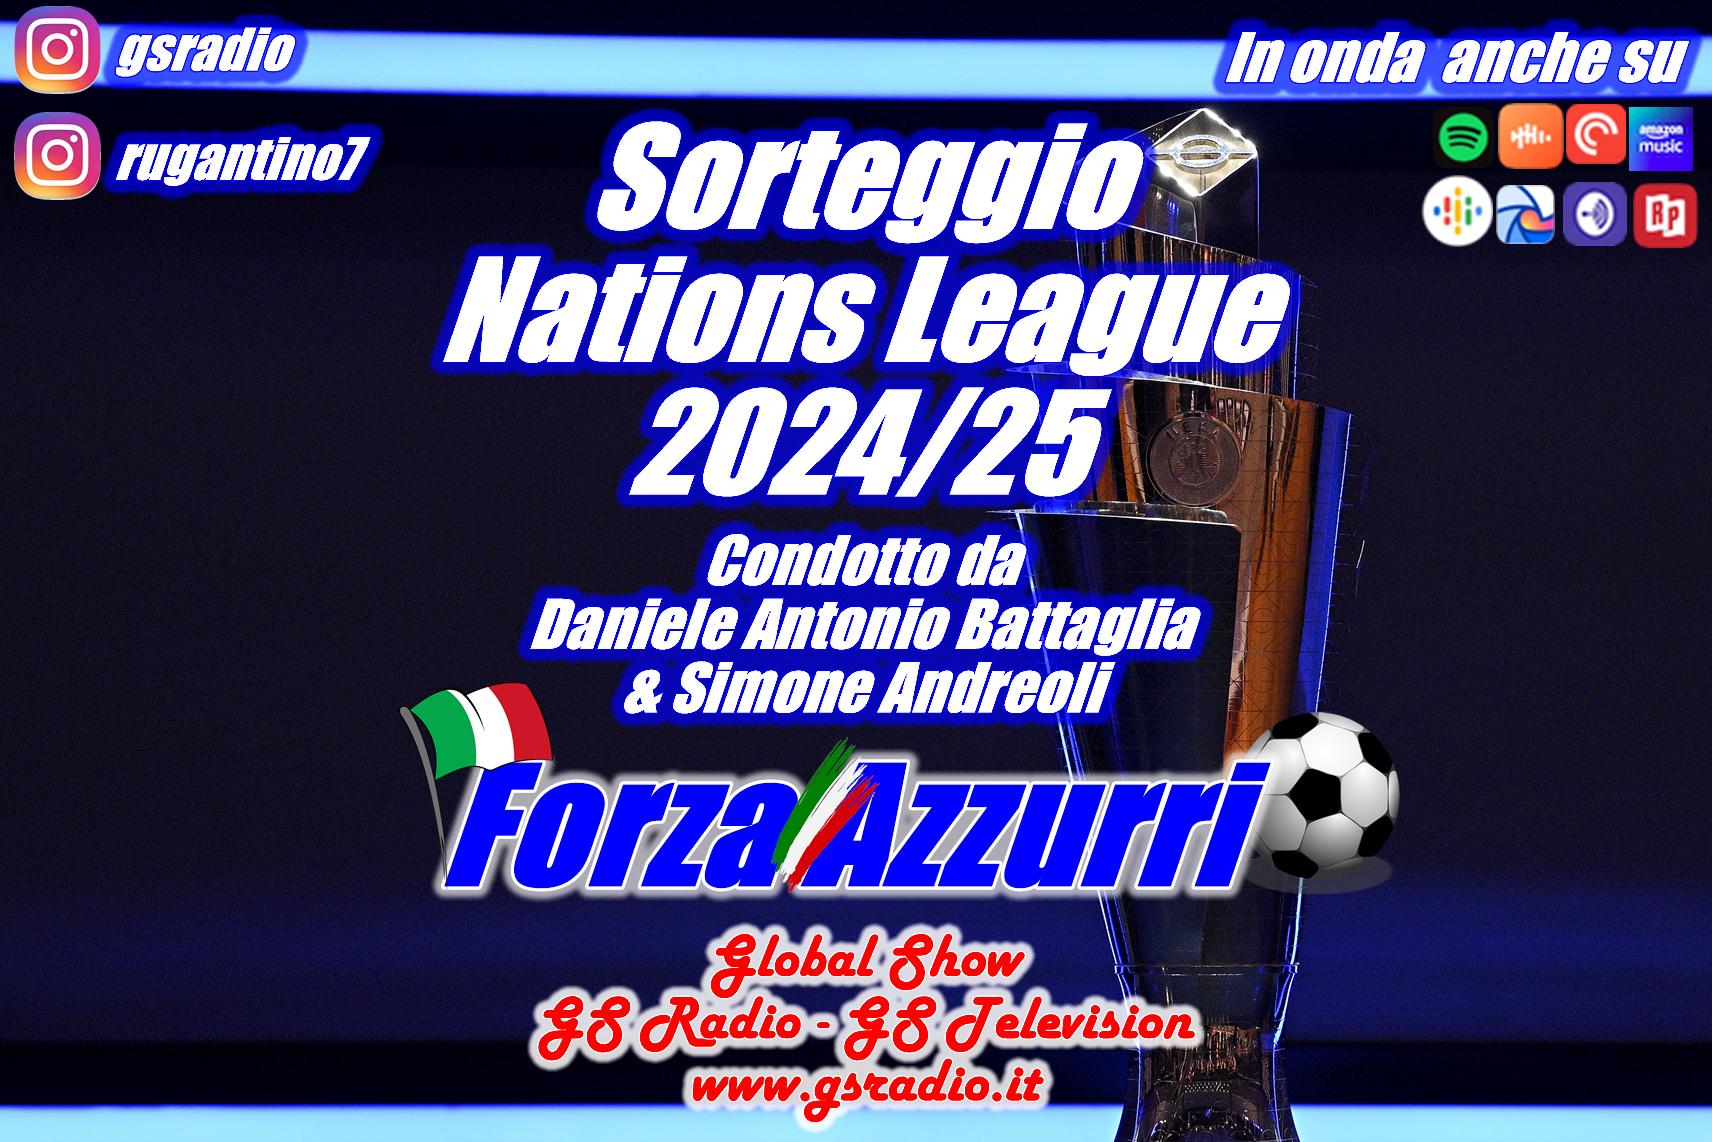 1 - Sorteggio Nations League 2024/25